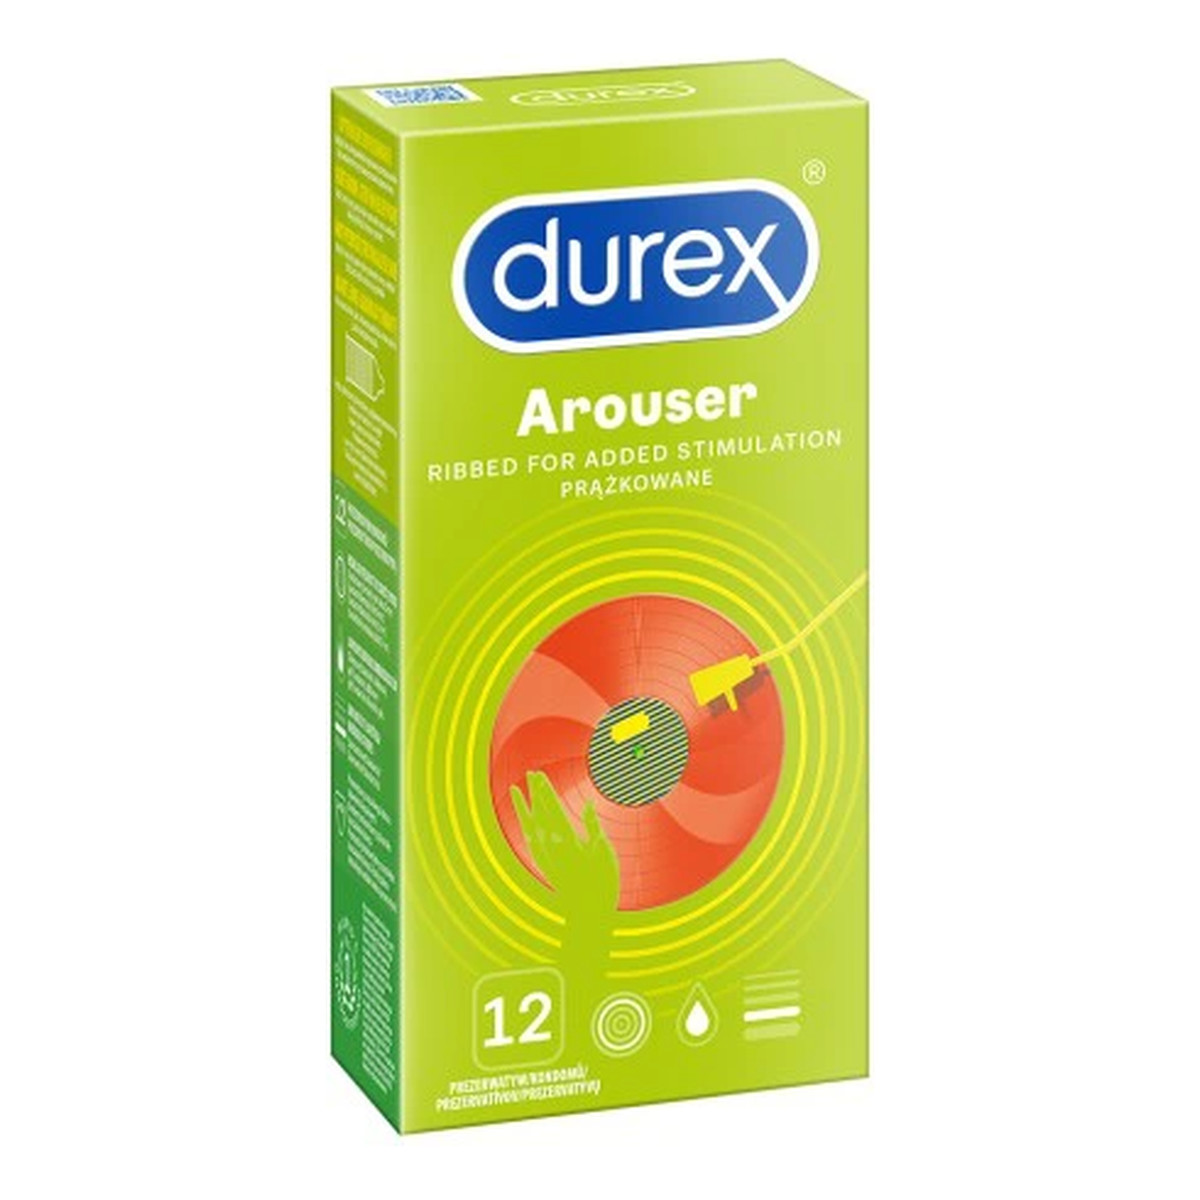 Durex Arouser Prezerwatywy 12szt.